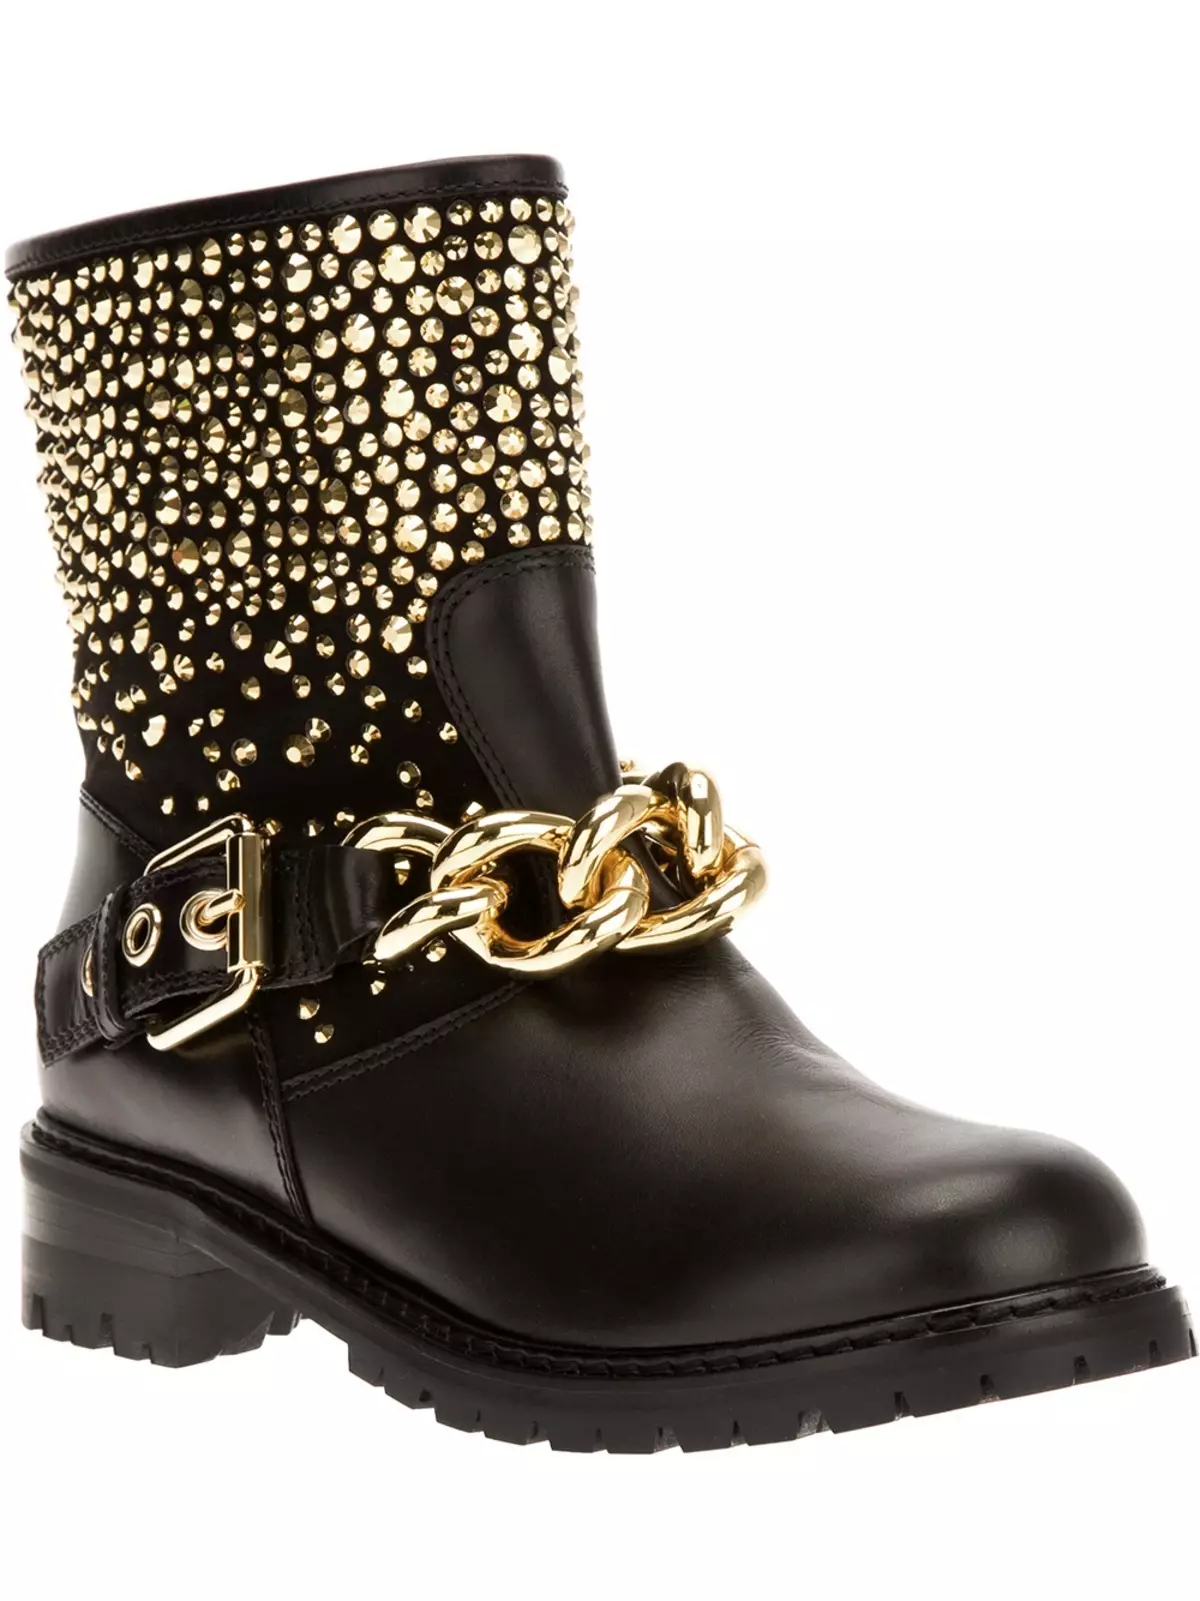 Boots (135 wêne): Trendên Fashion 2021, ji Rock Rock, Eva, Camel, Grinders, How to Wear Derby With Jeans, Mîlîtar & Burgundy Style 1842_91